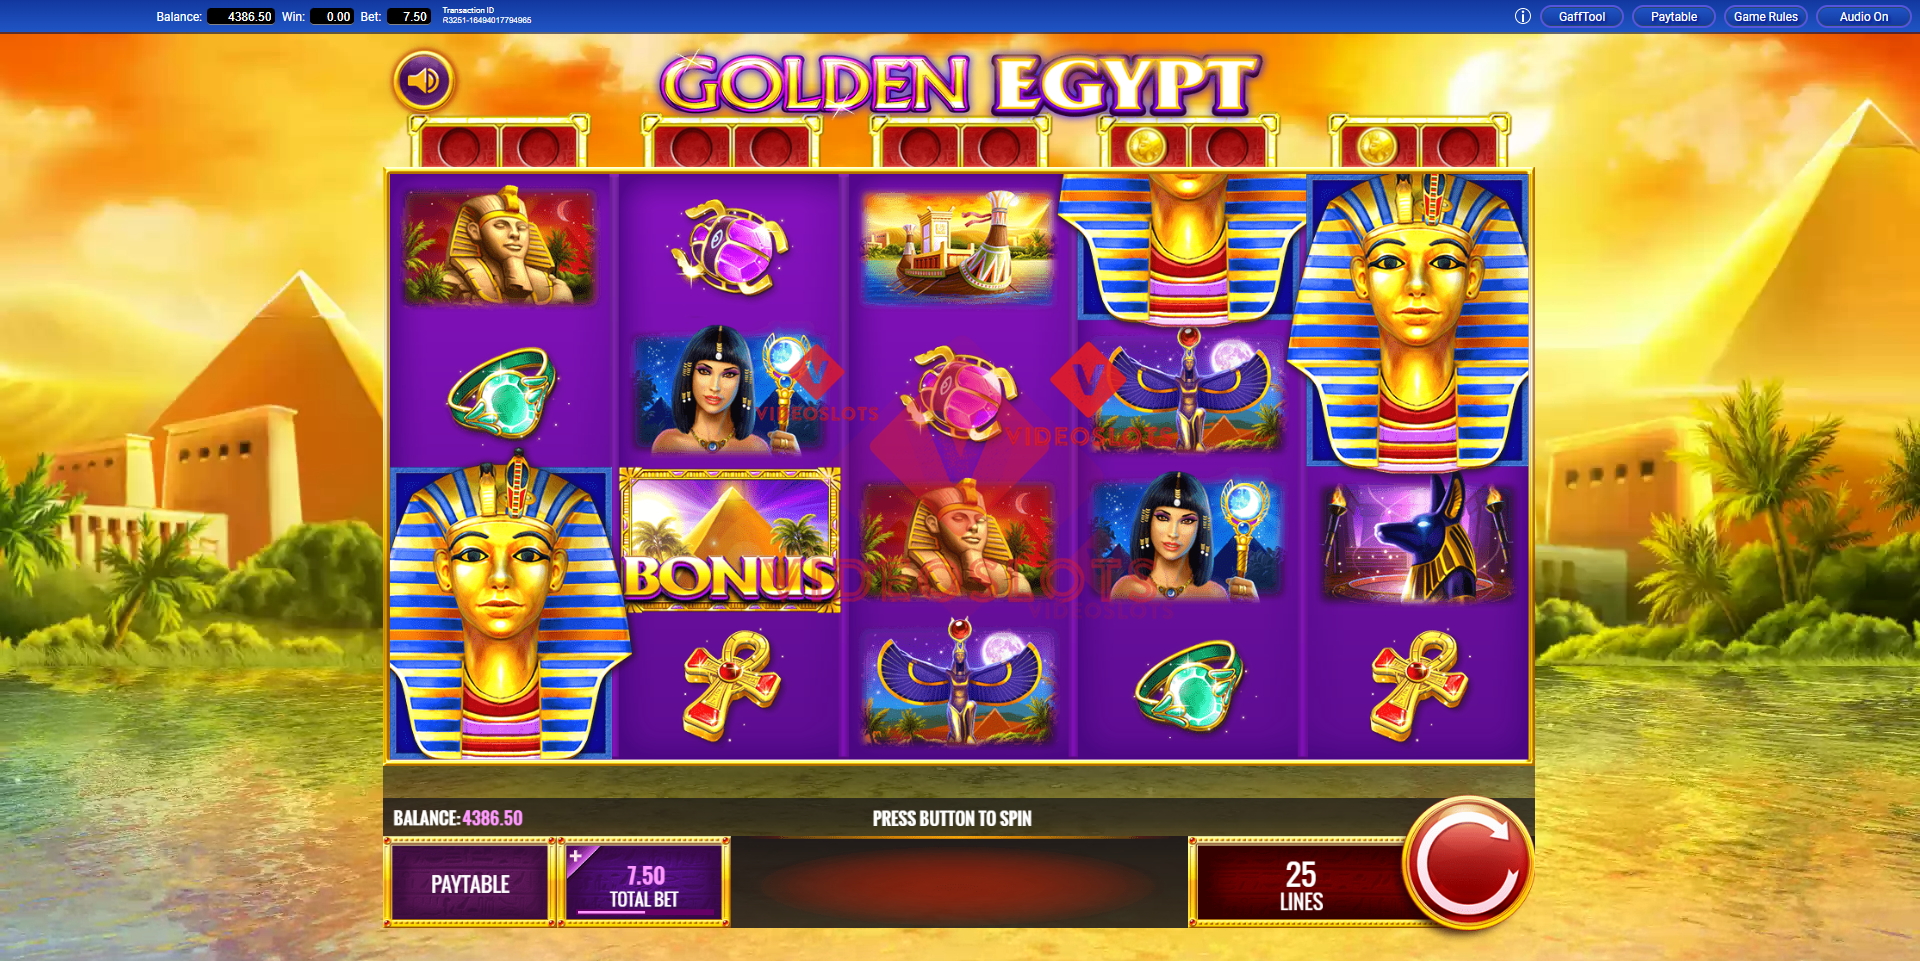 Base Game for Golden Egypt slot from IGT